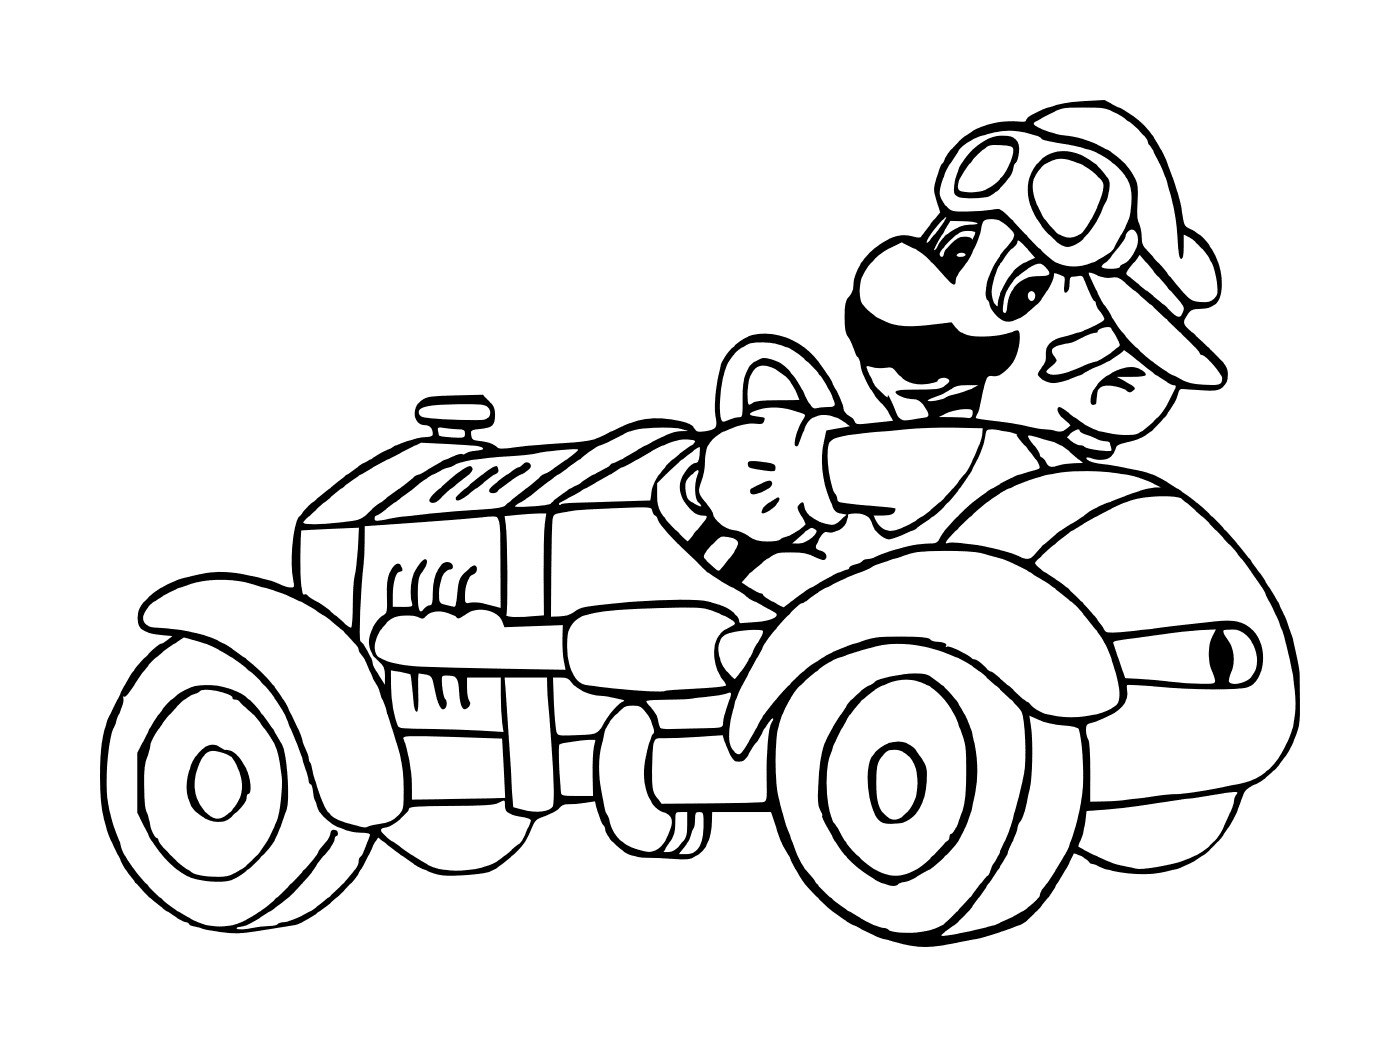  Mario Kart, an old car 